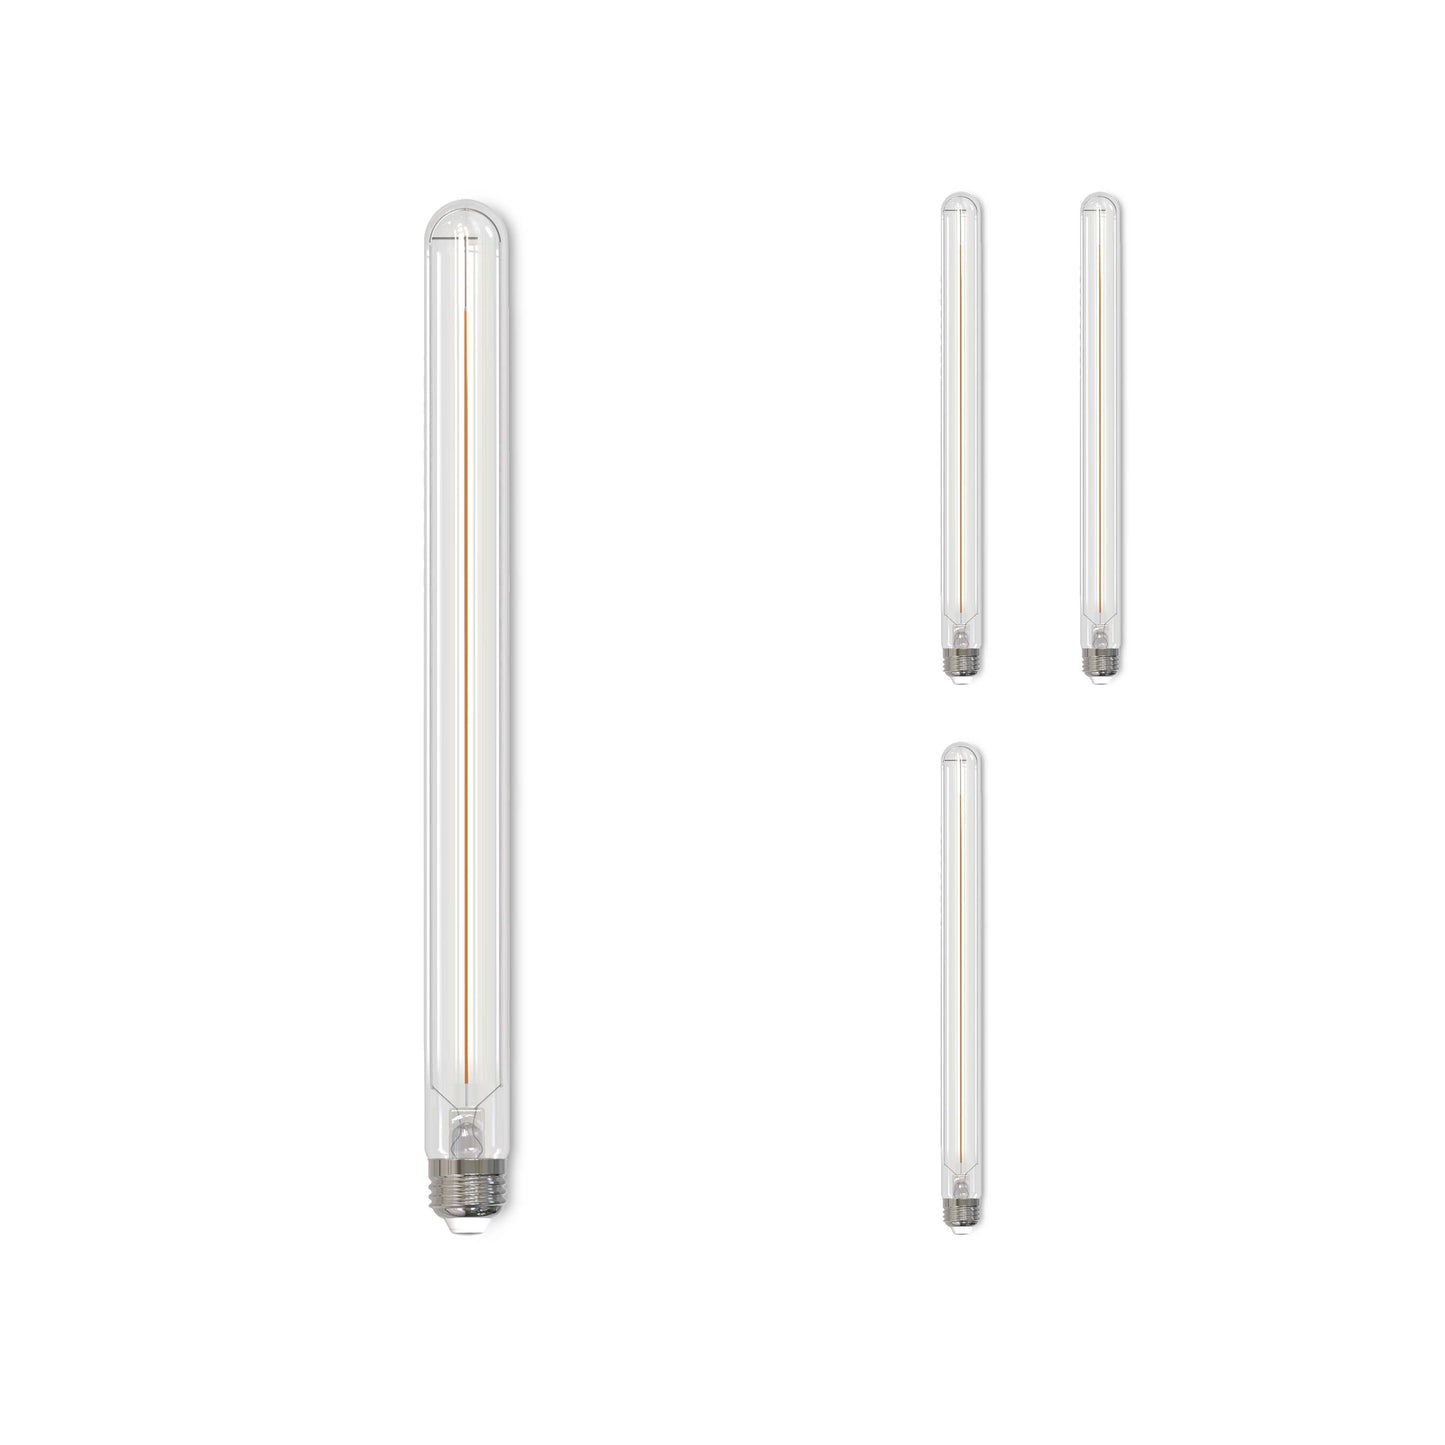 776721 - Filaments Dimmable Clear Glass 15" T9 LED Light Bulb - 5 Watt - 3000K - 4 Pack